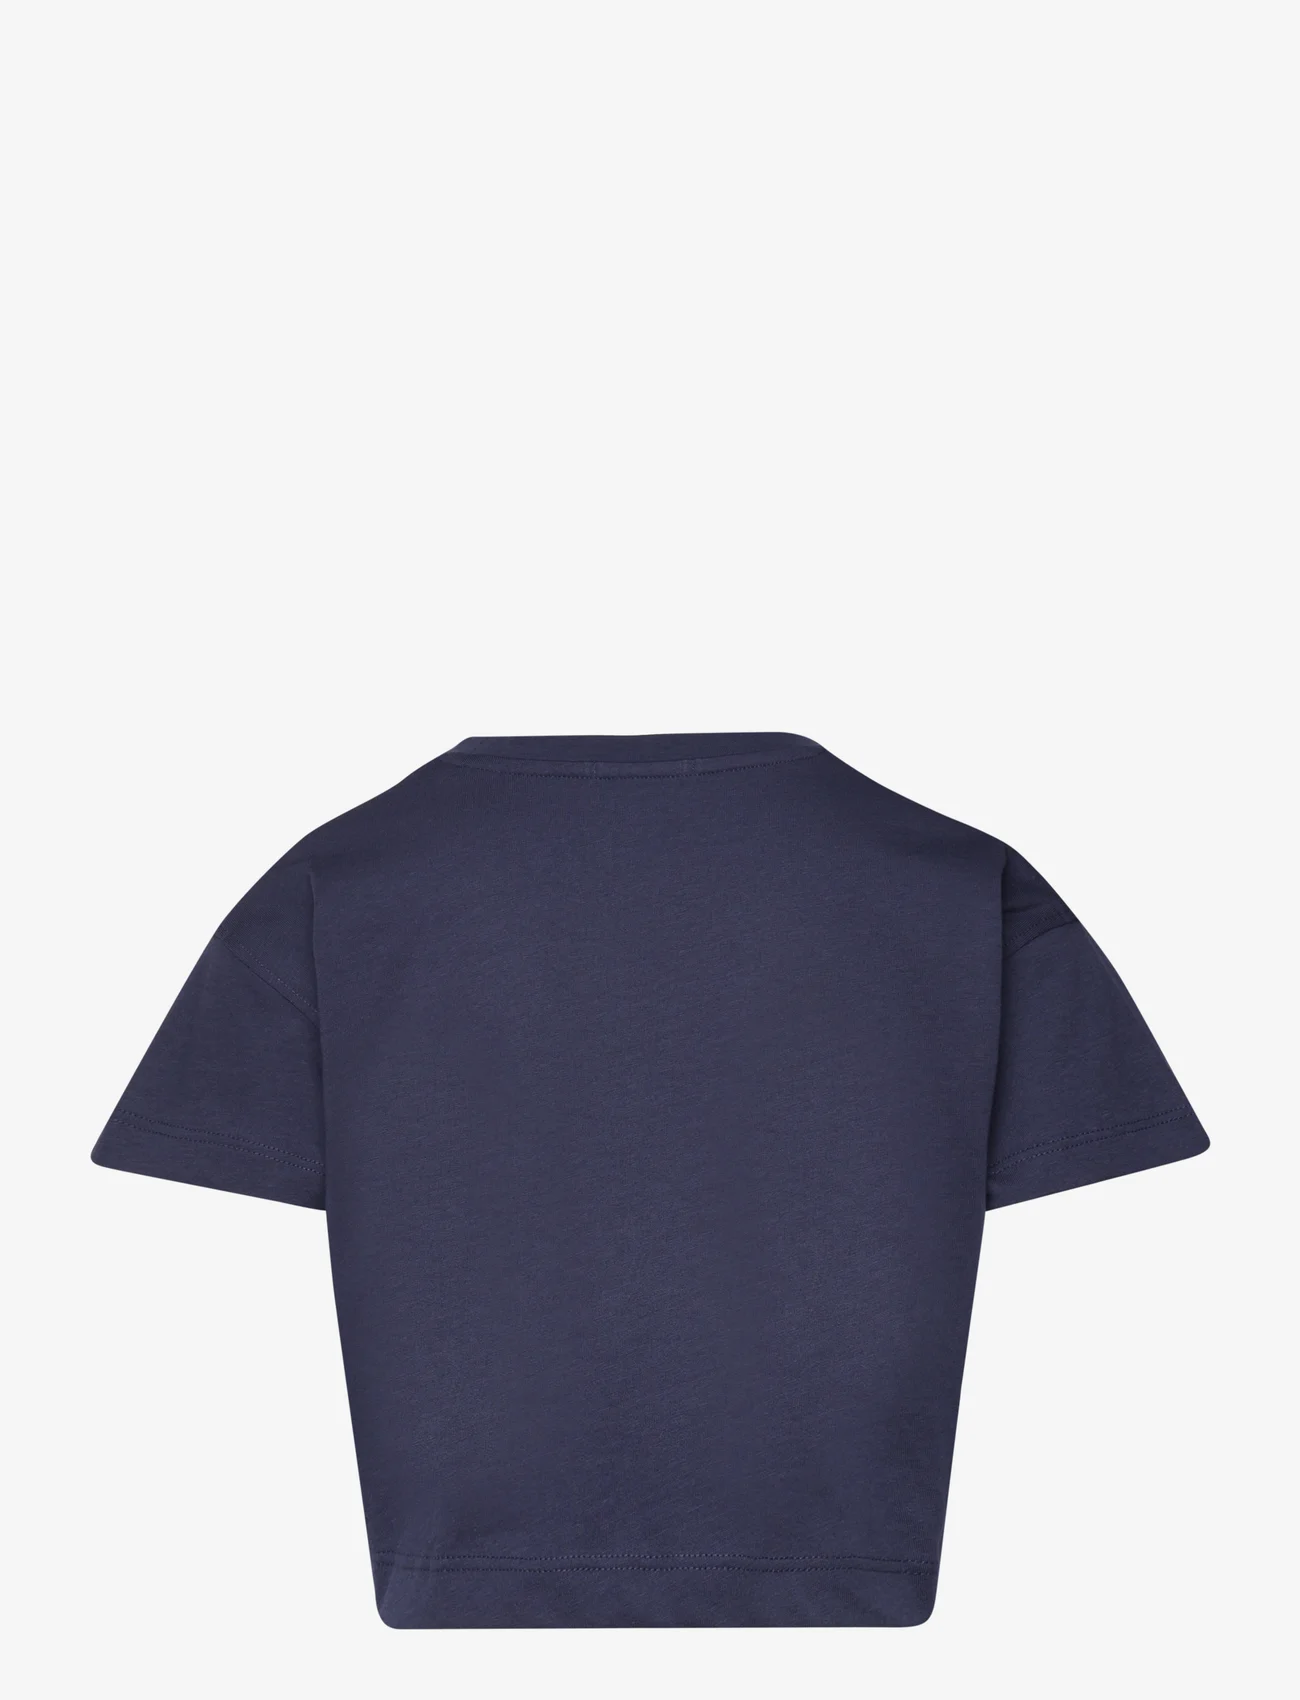 Tom Tailor - cropped knotted t-shirt - kurzärmelige - dark blueberry - 1